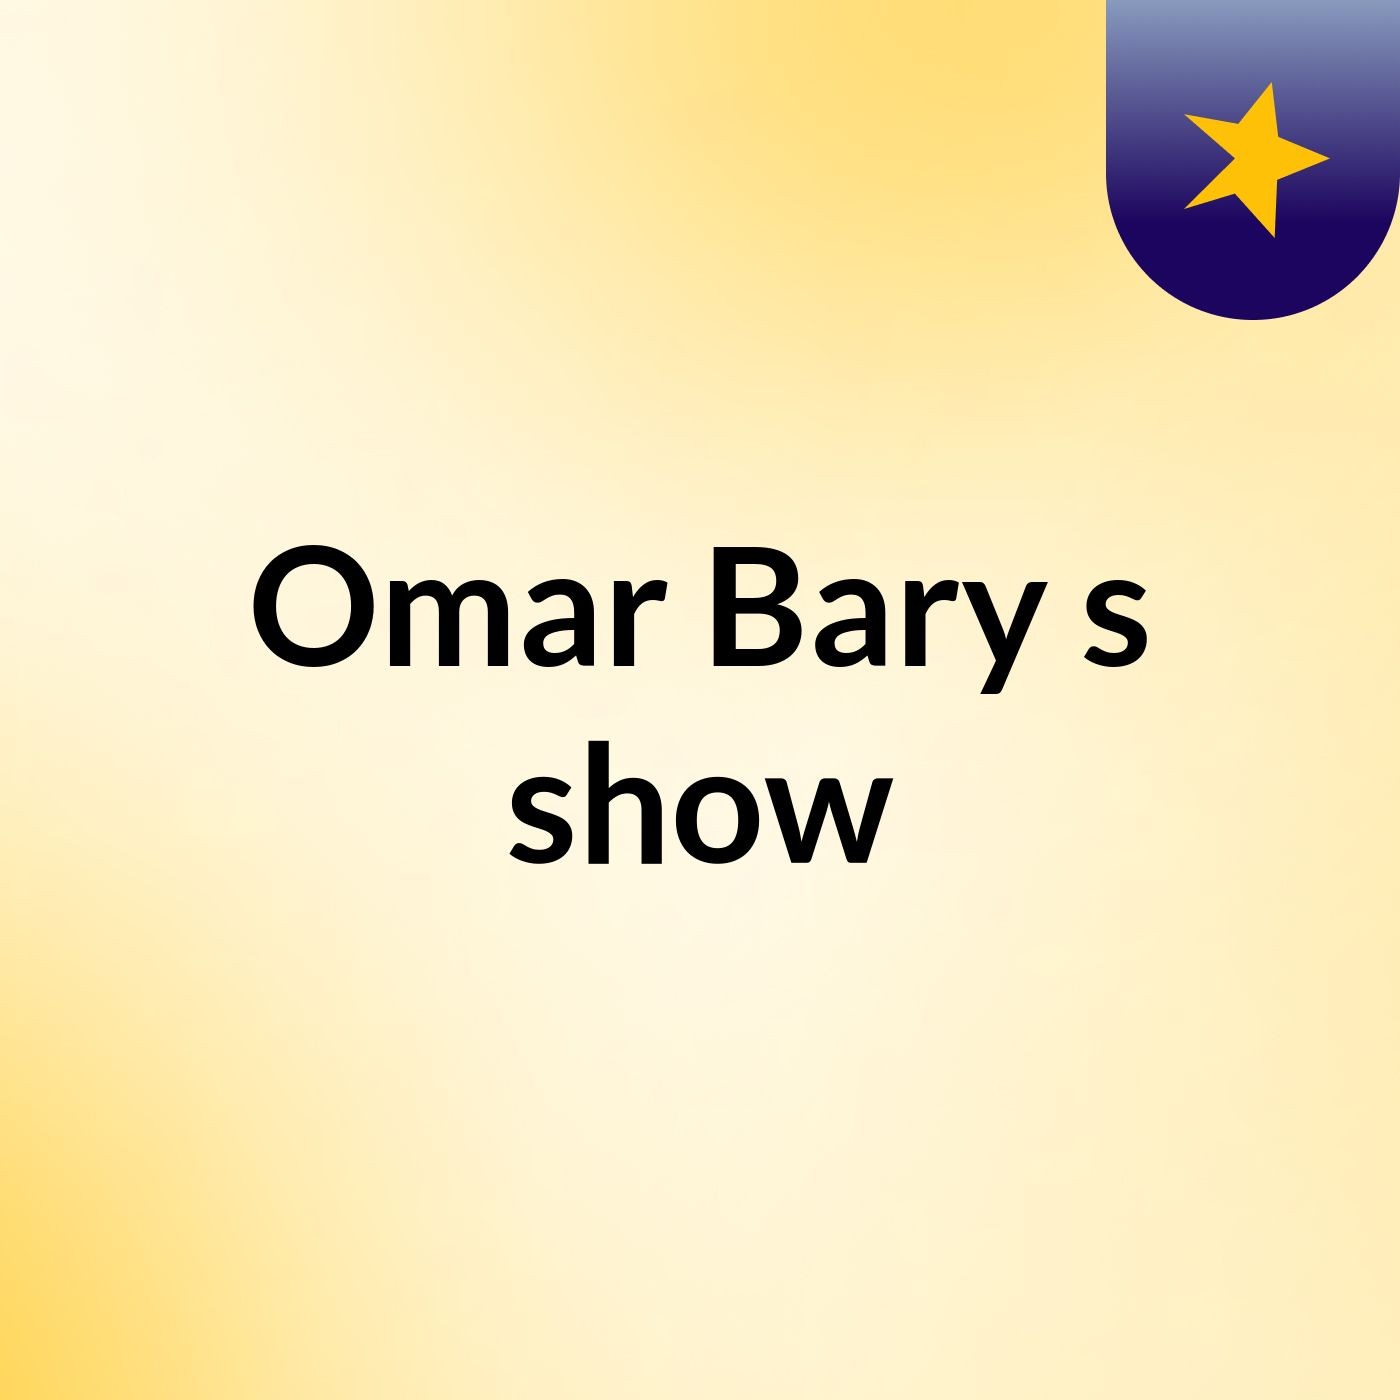 Omar Bary's show